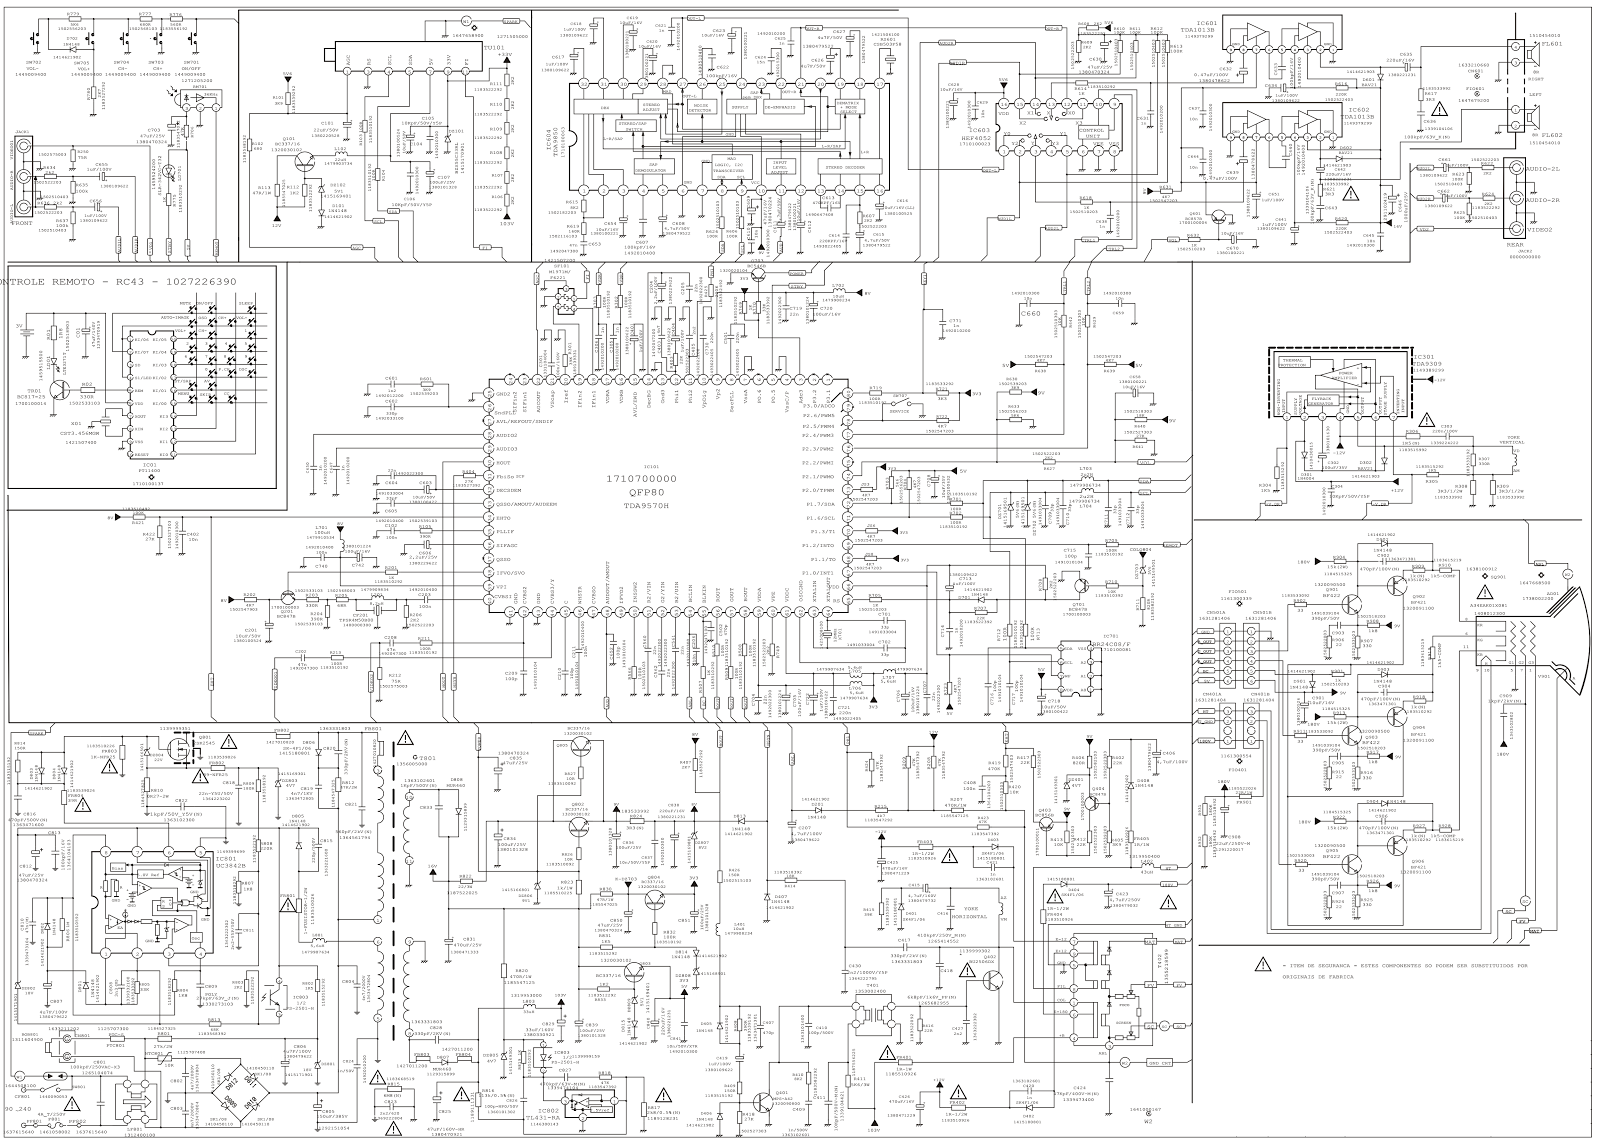 manguonblog: Color TV circuit diagram – CRT type – Using ICs TDA9850